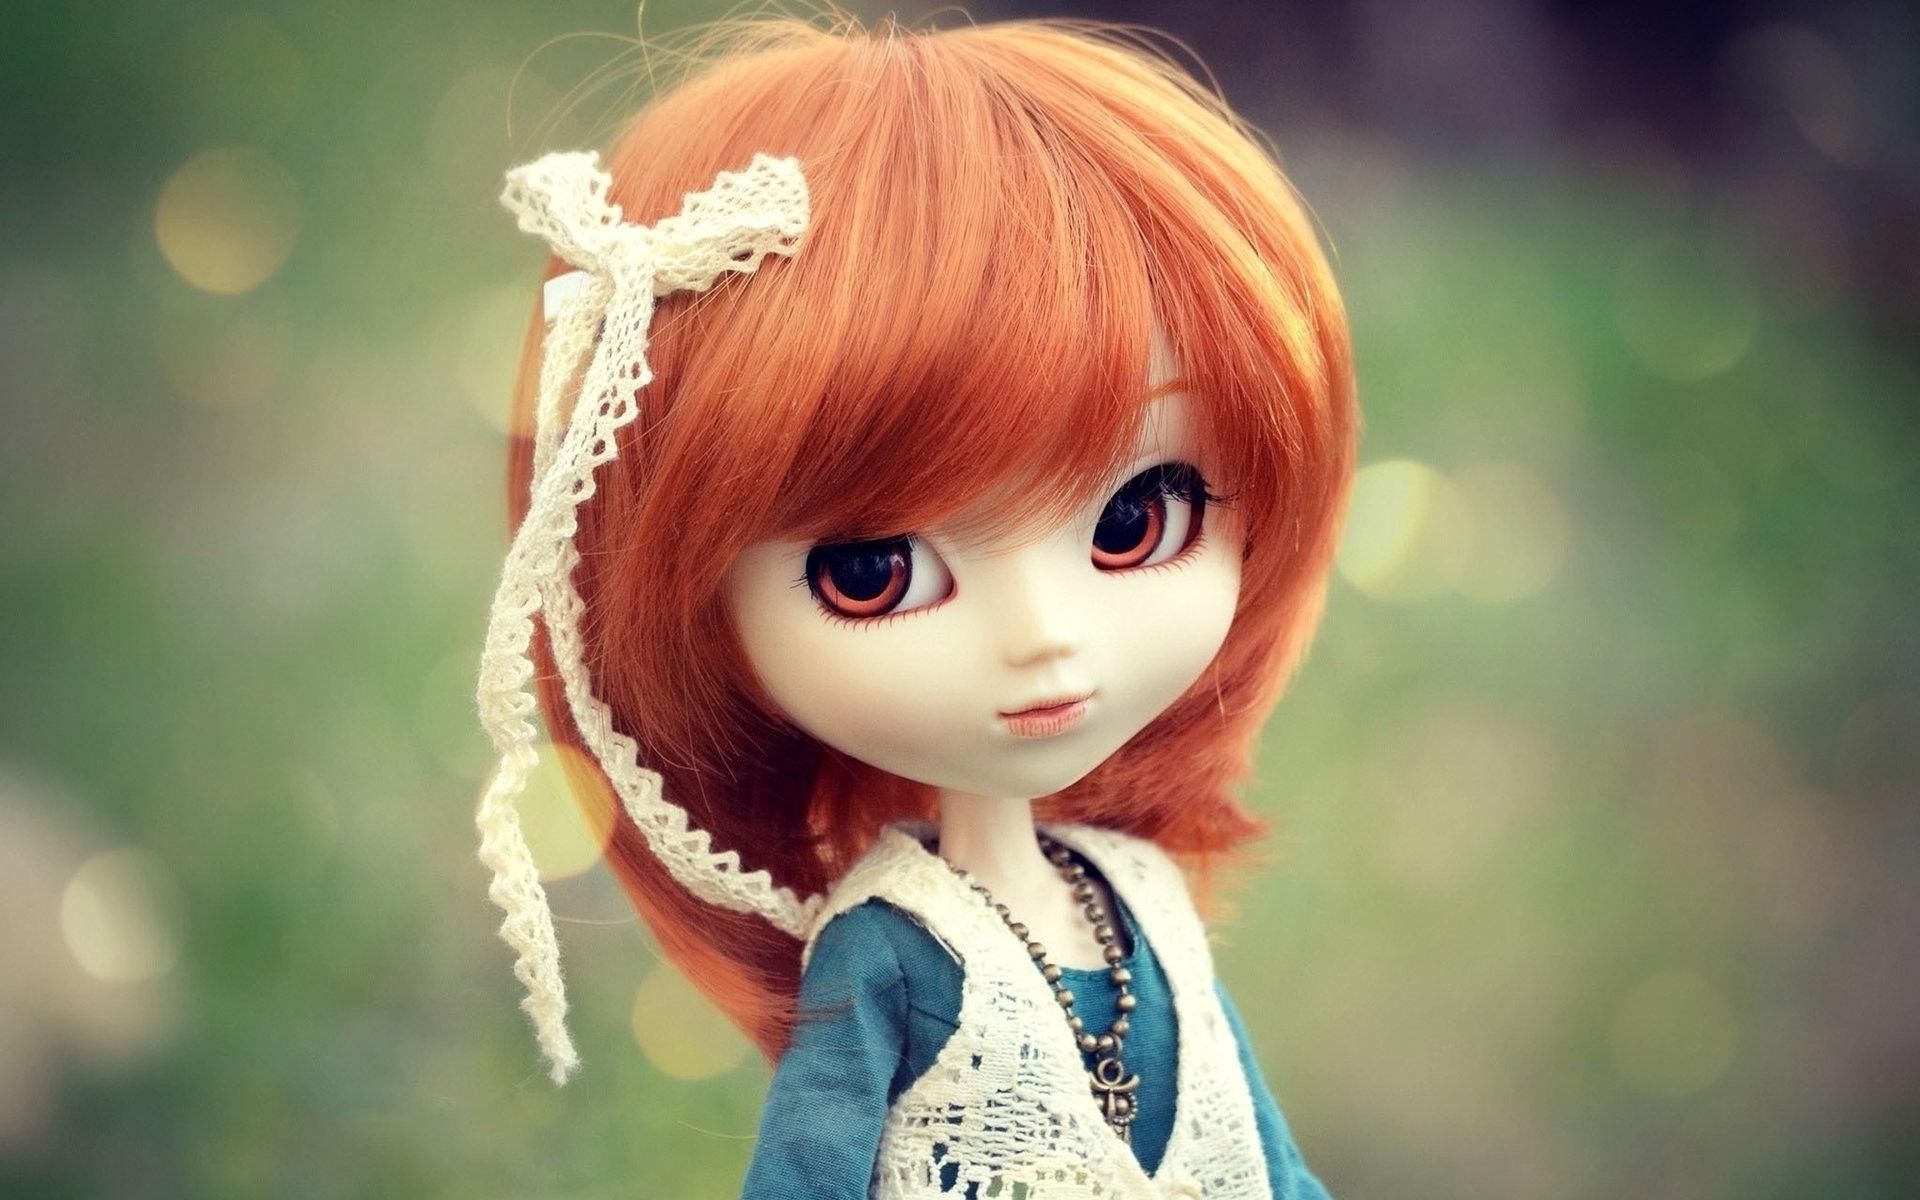 Beautiful And Cute Dolls Wallpaper Whatsapp Dp For Girl